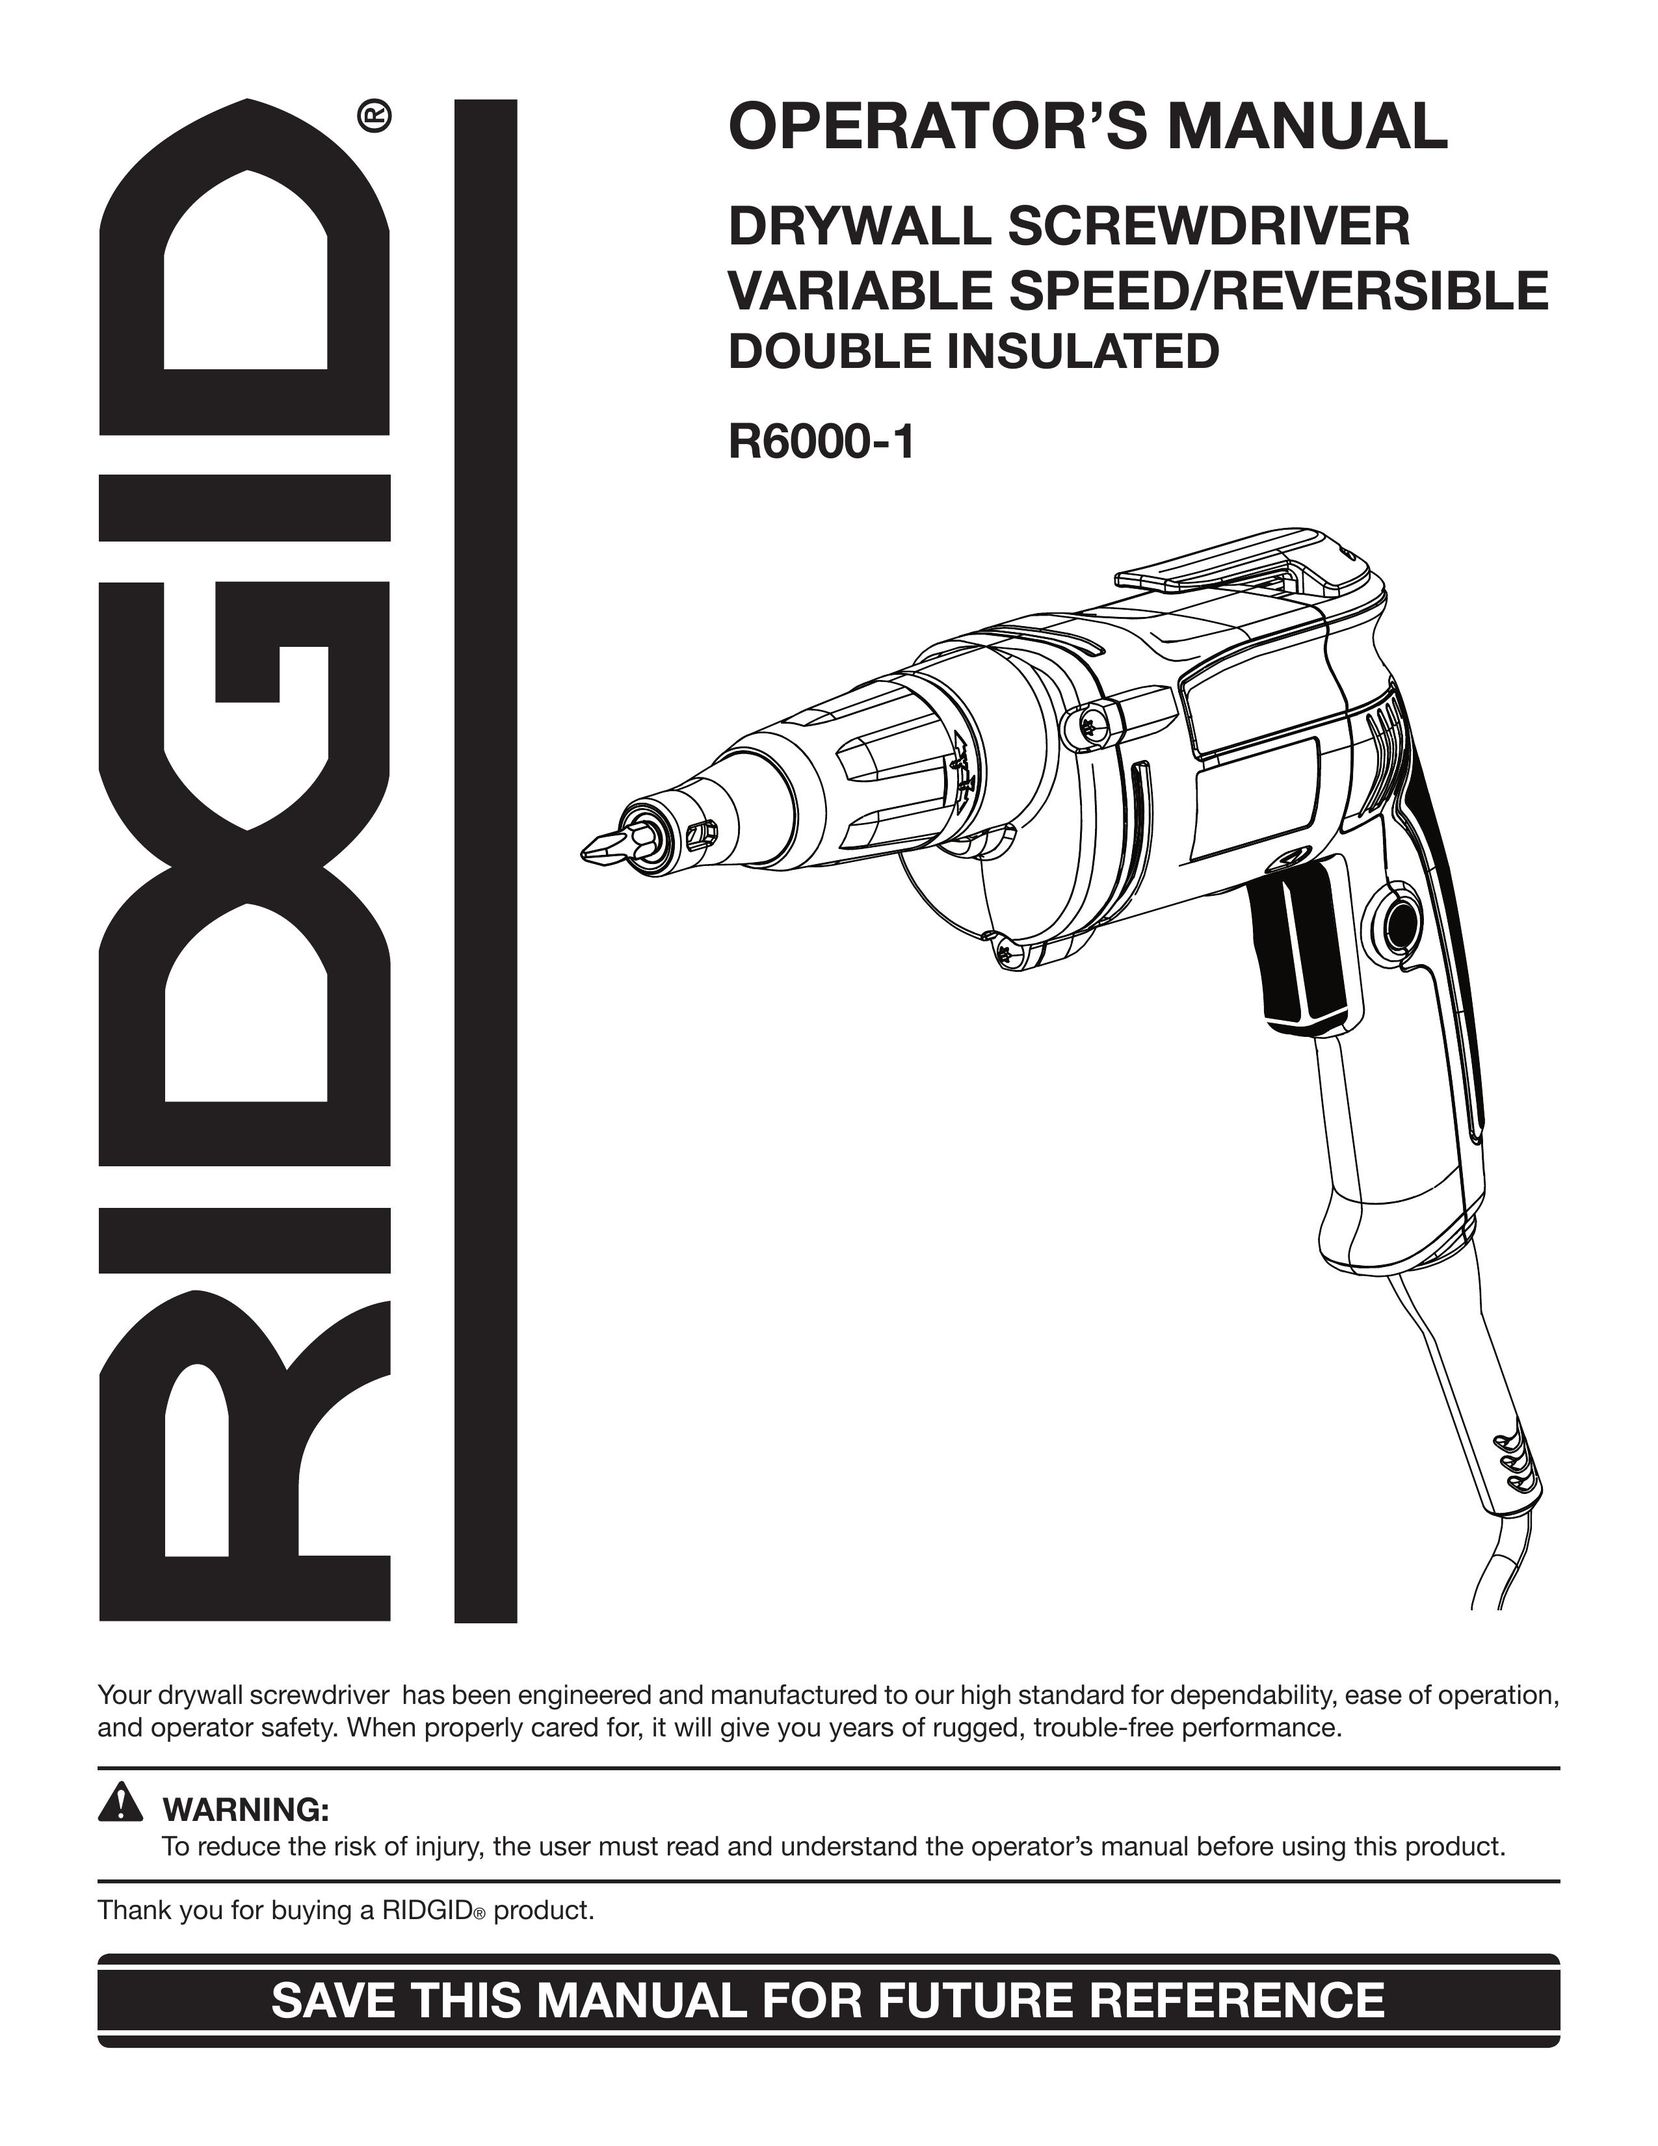 RIDGID R6000-1 Power Screwdriver User Manual